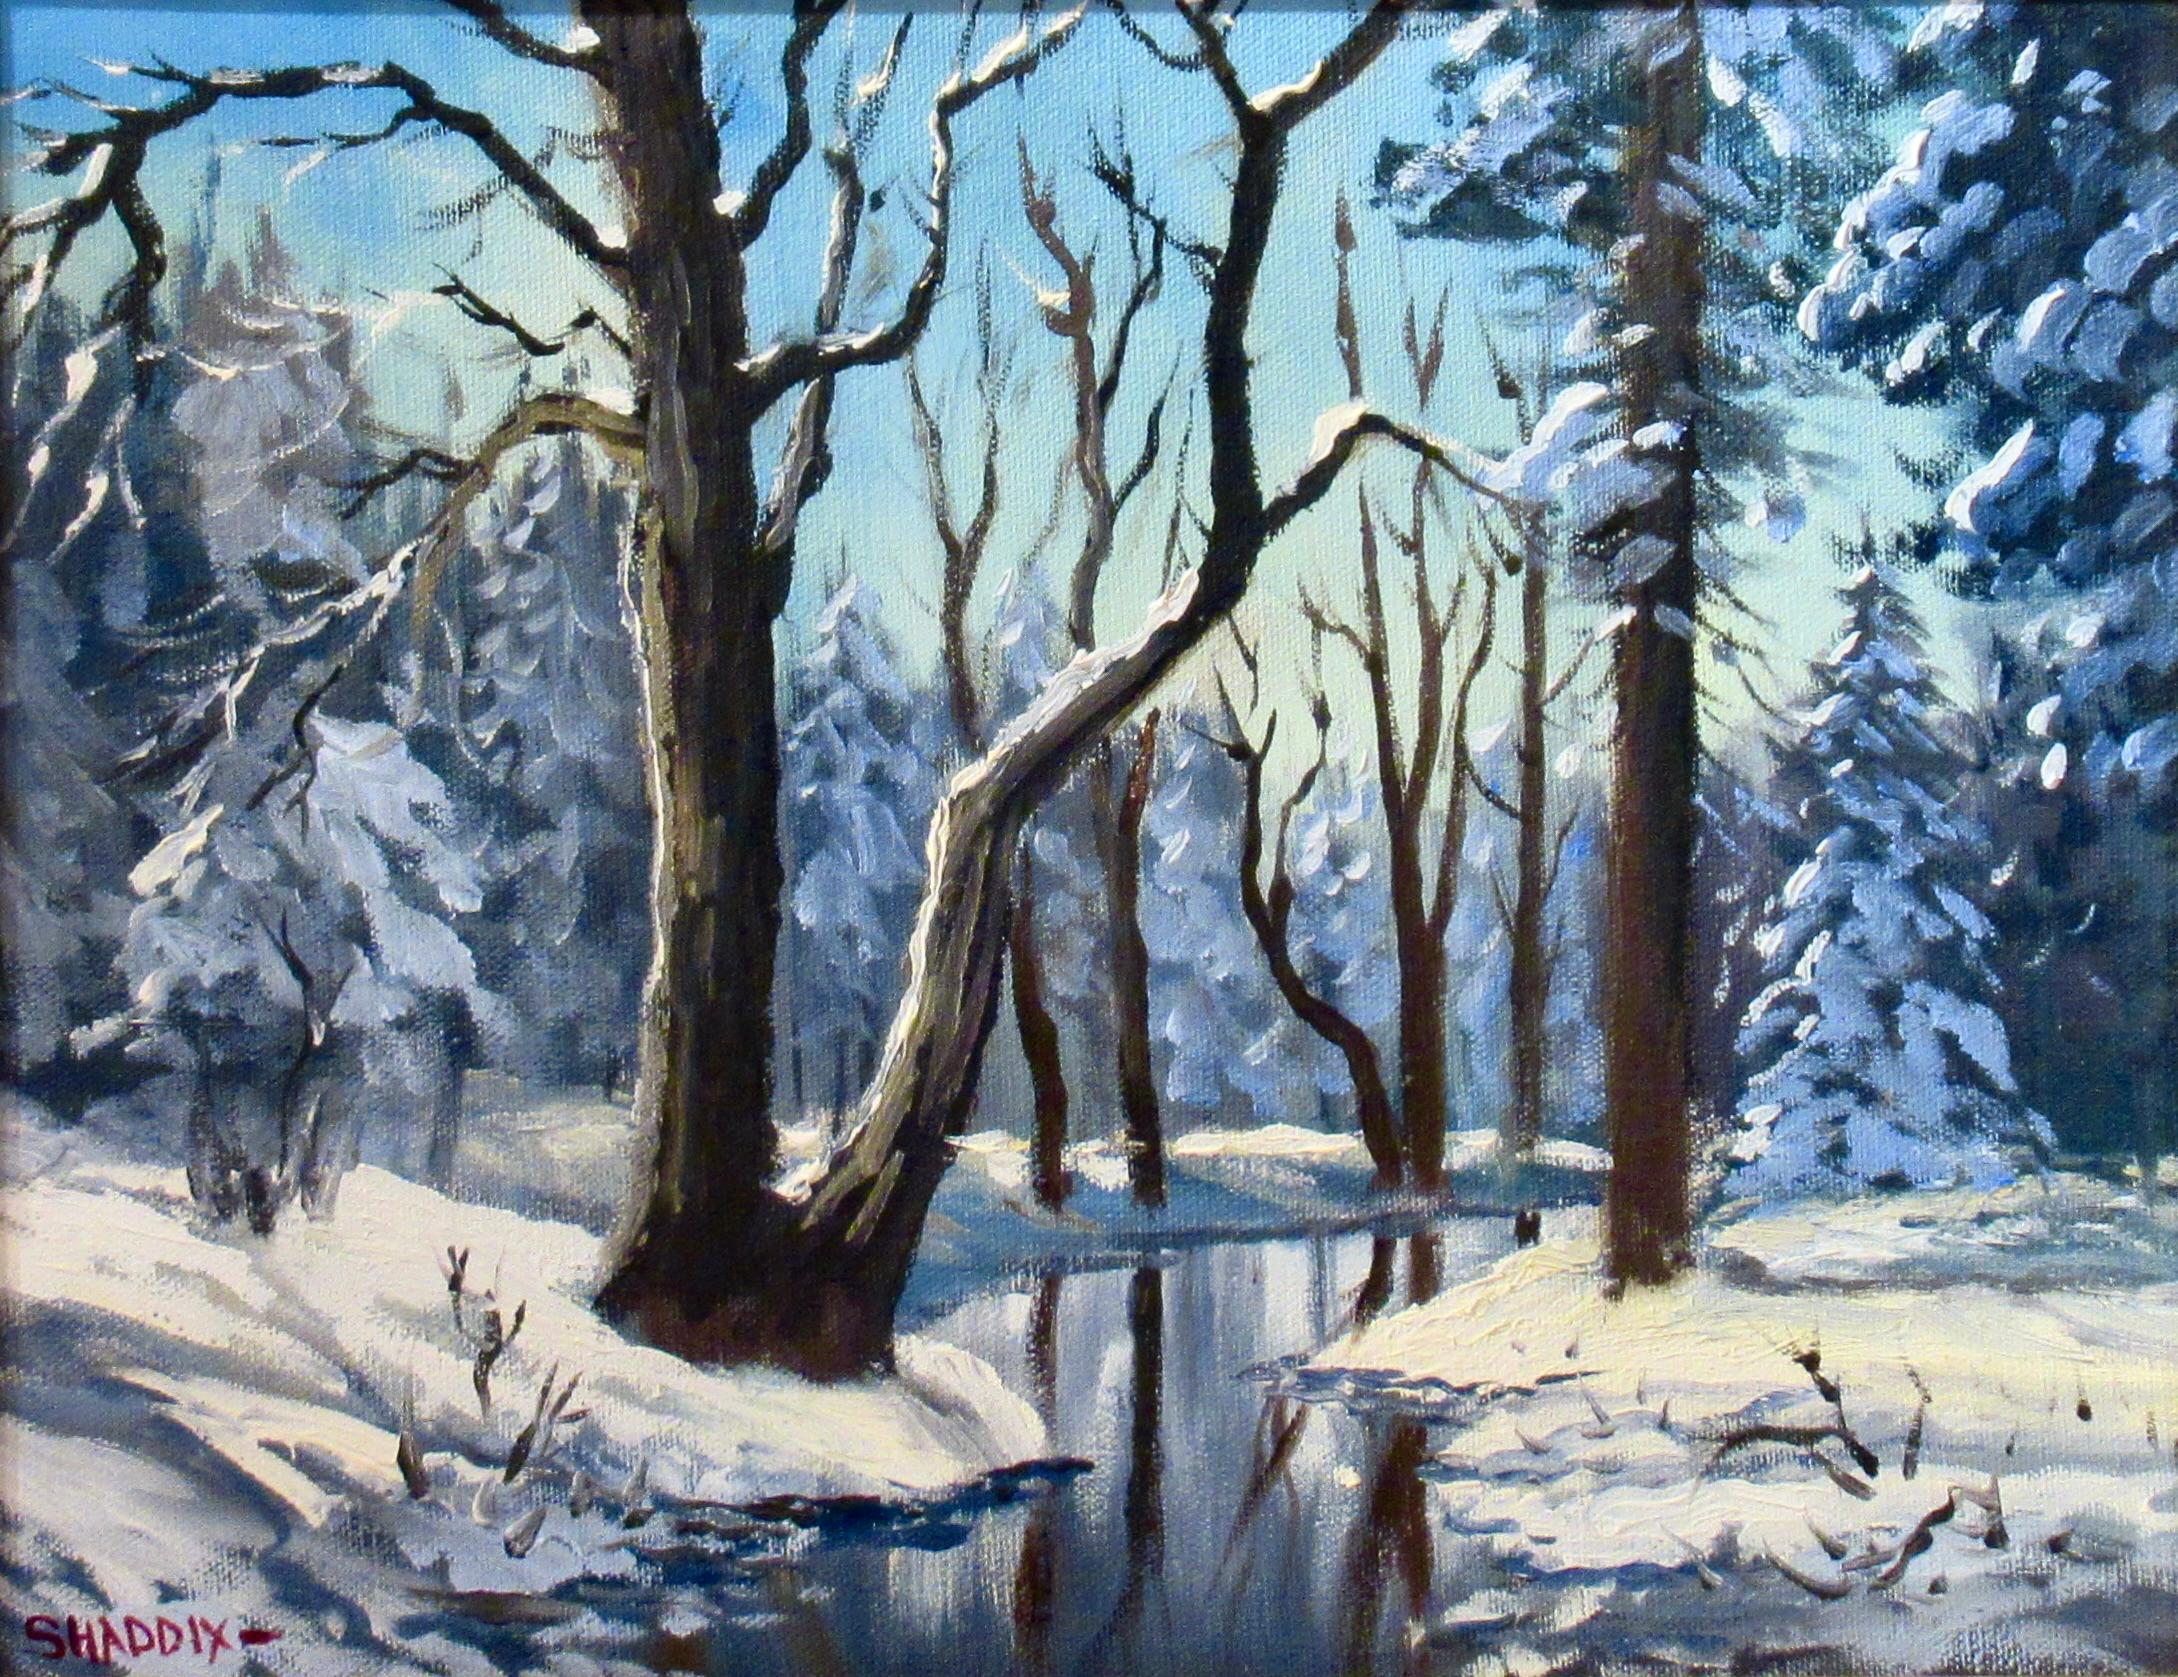 Winter Landcape - Painting by Bill Shaddix